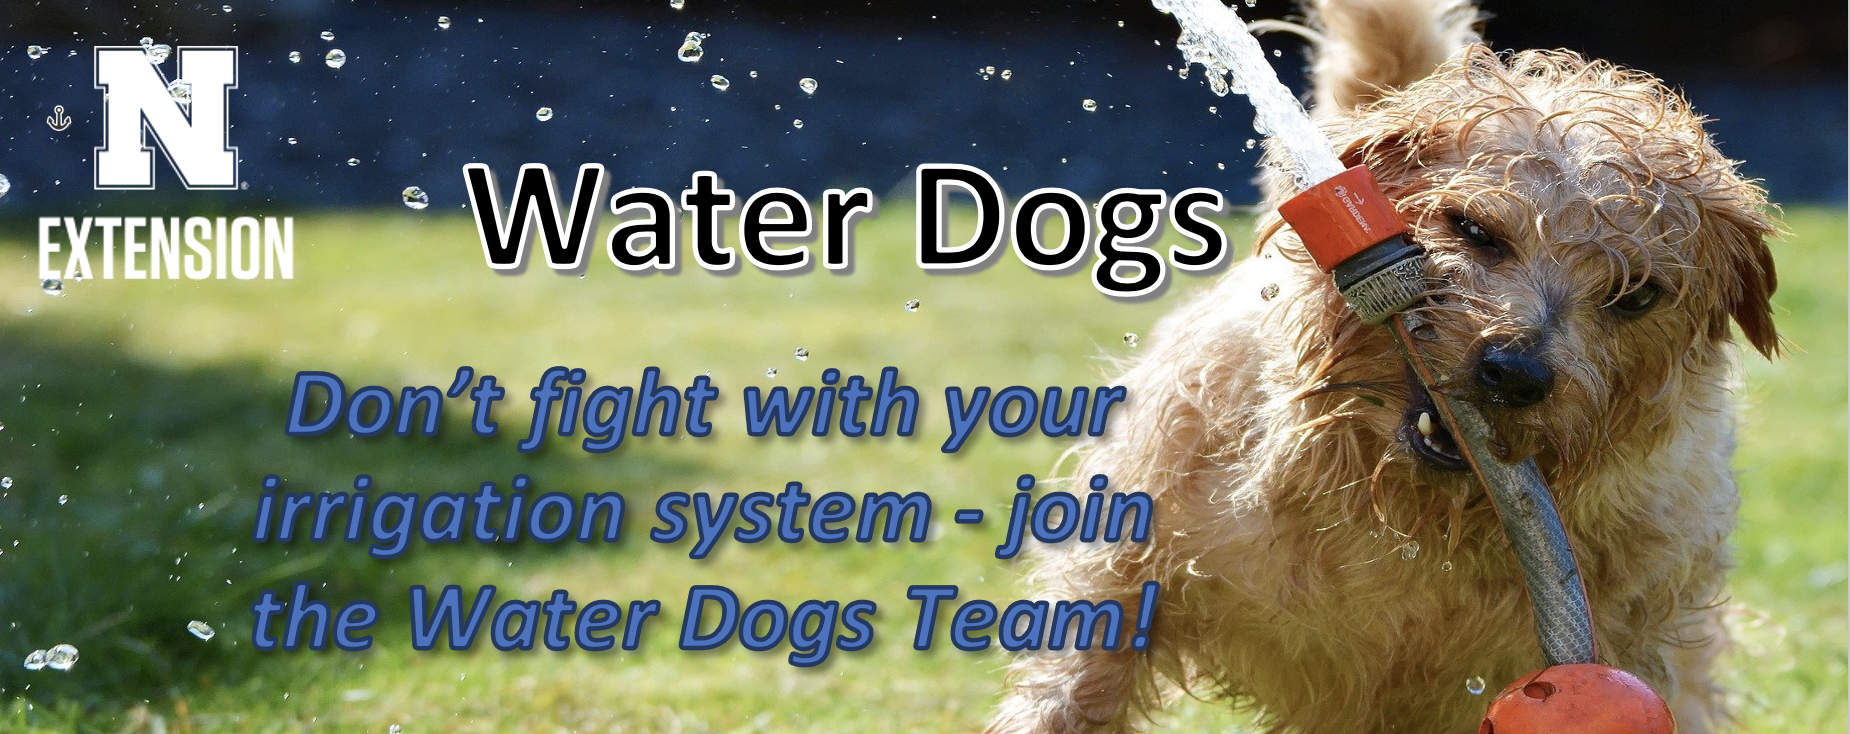 Water dogs program image. 